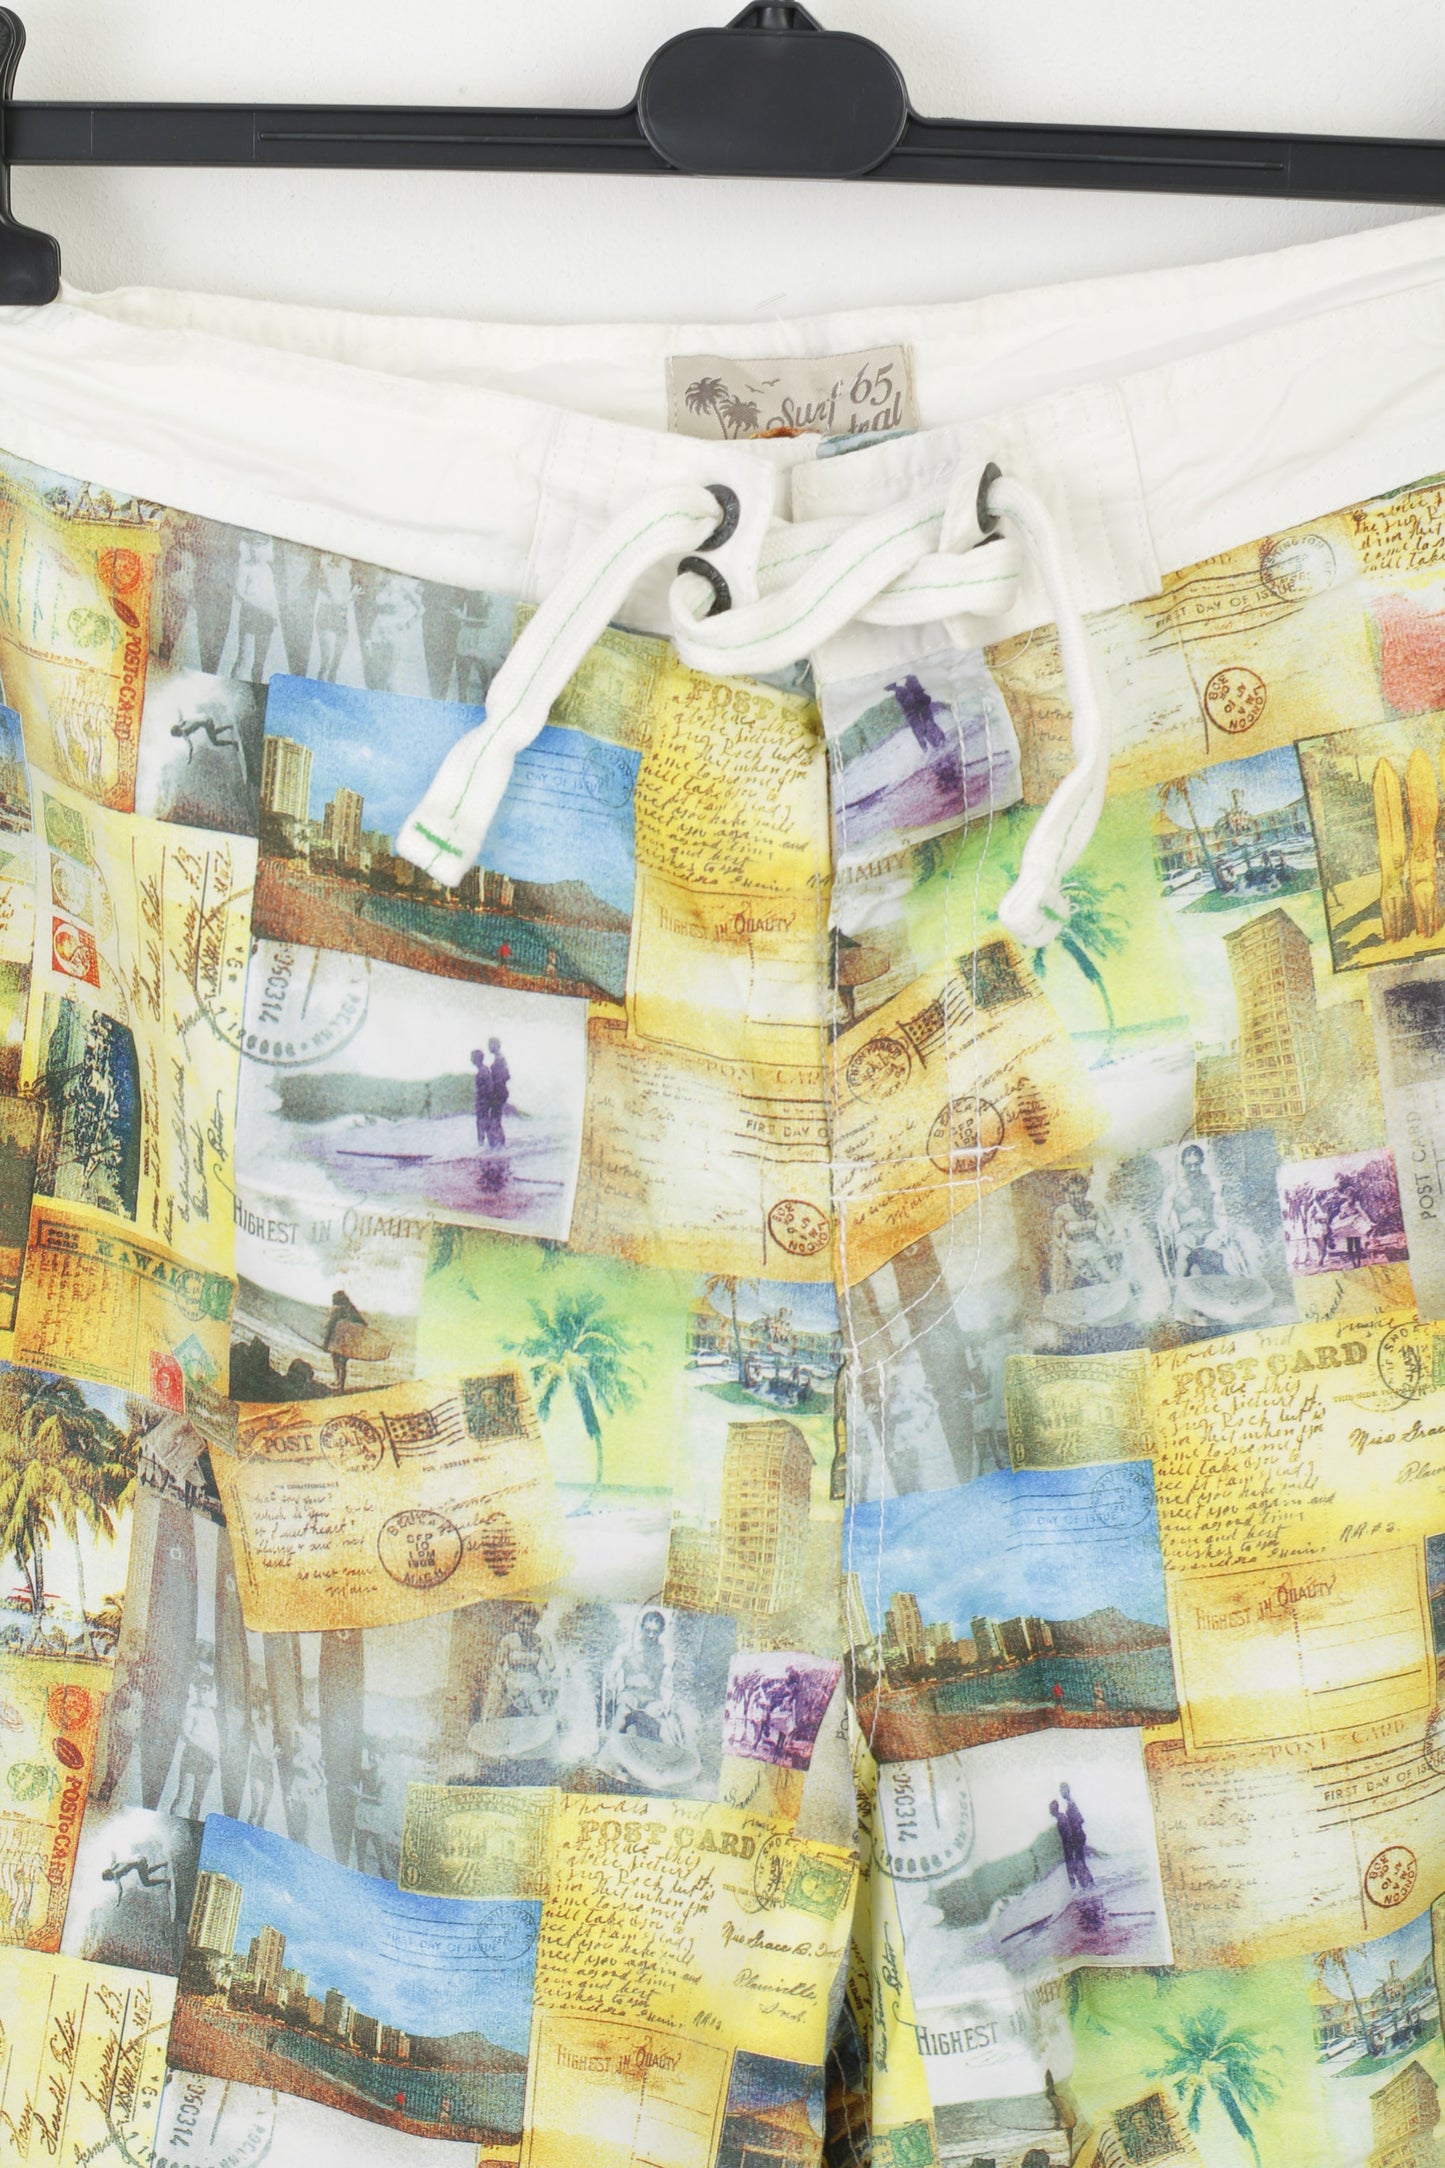 Surf 65 Central Men L Shorts Multicolour Printed Swimpants Summer Bermuda